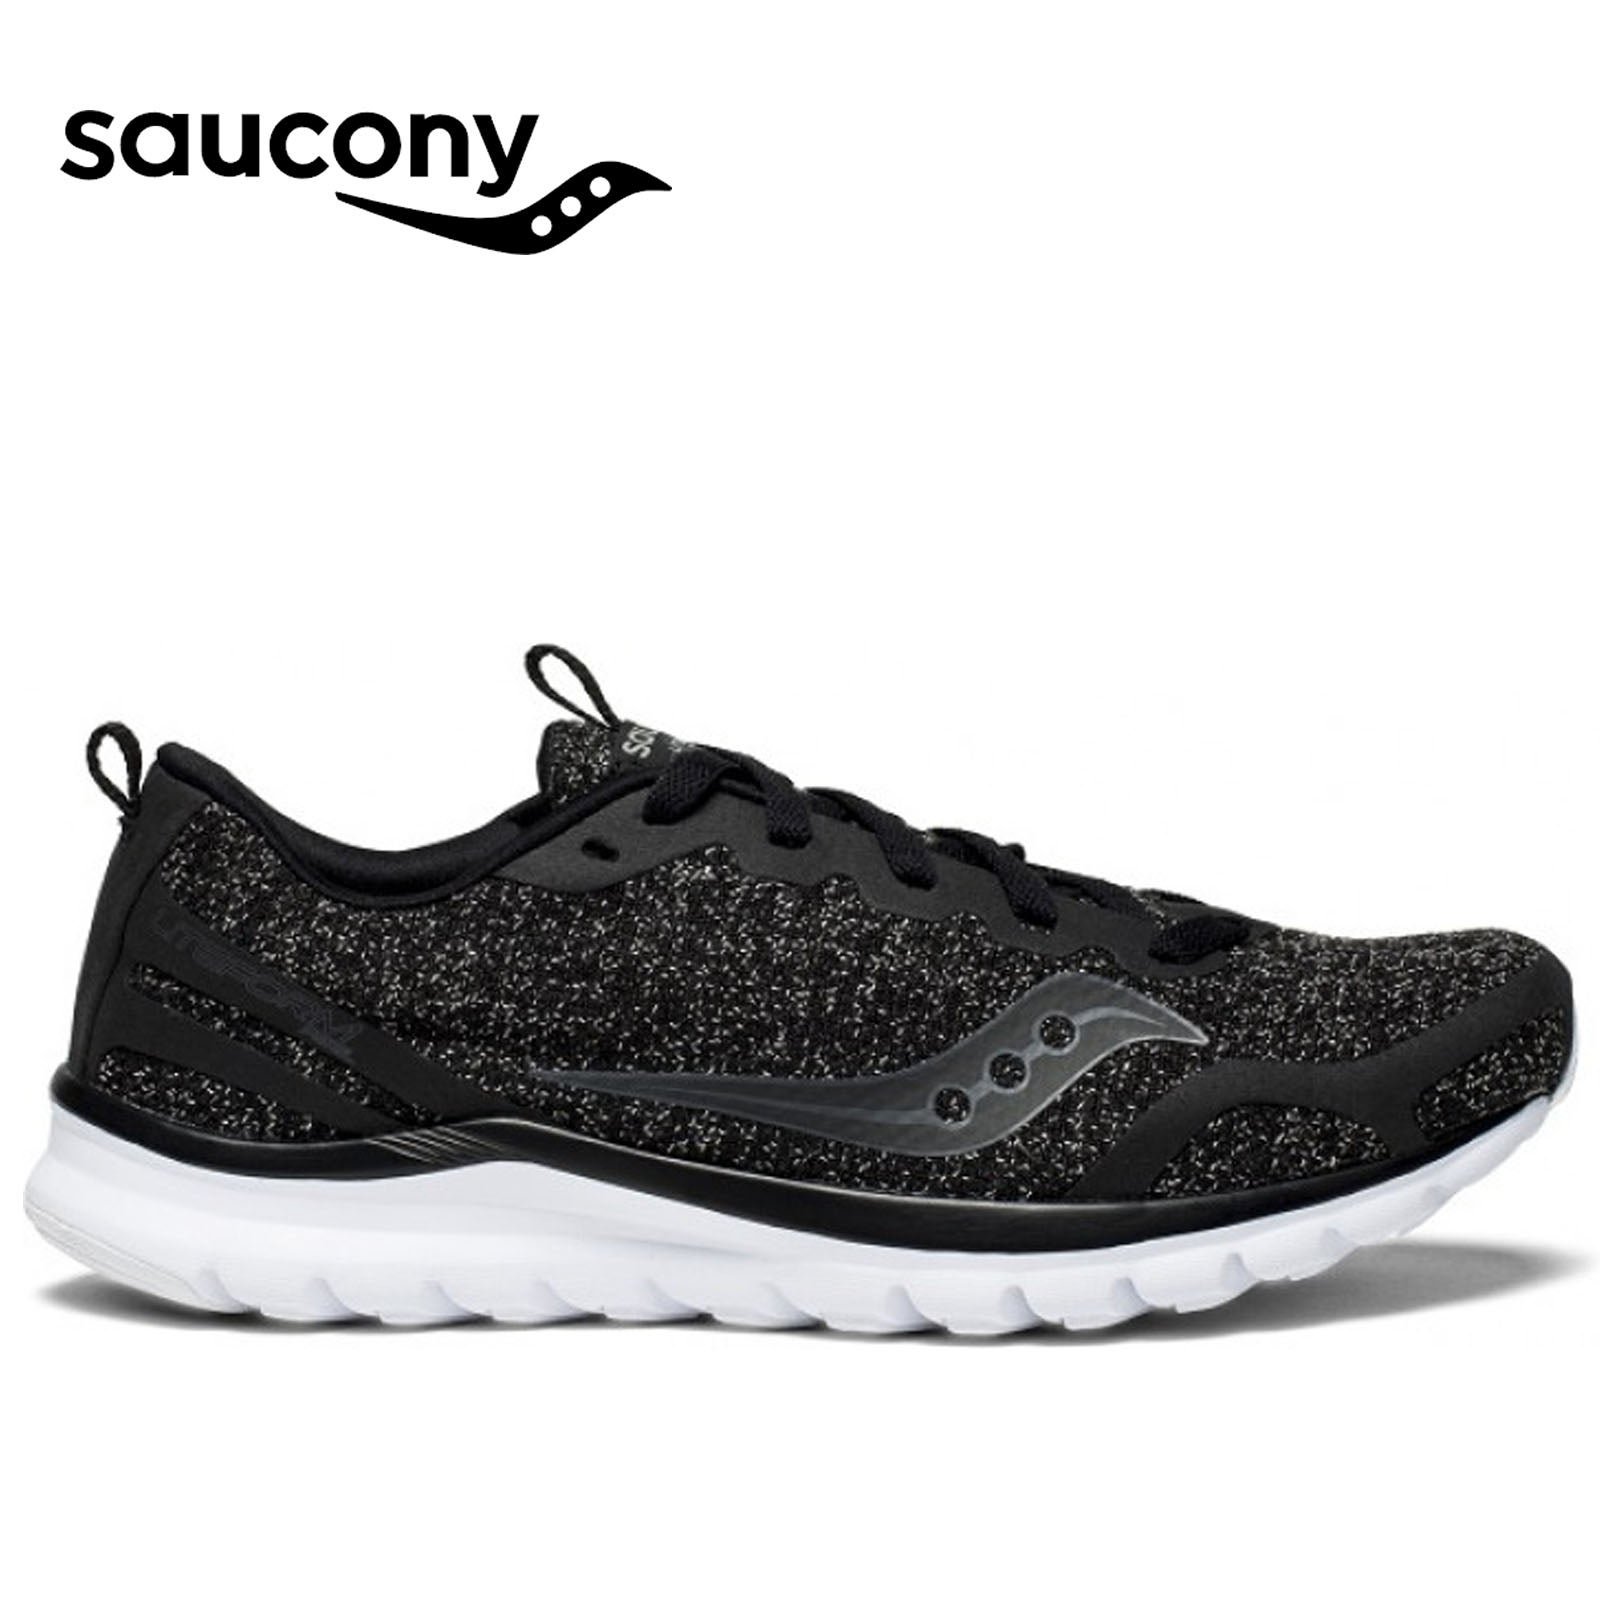 saucony memory foam shoes